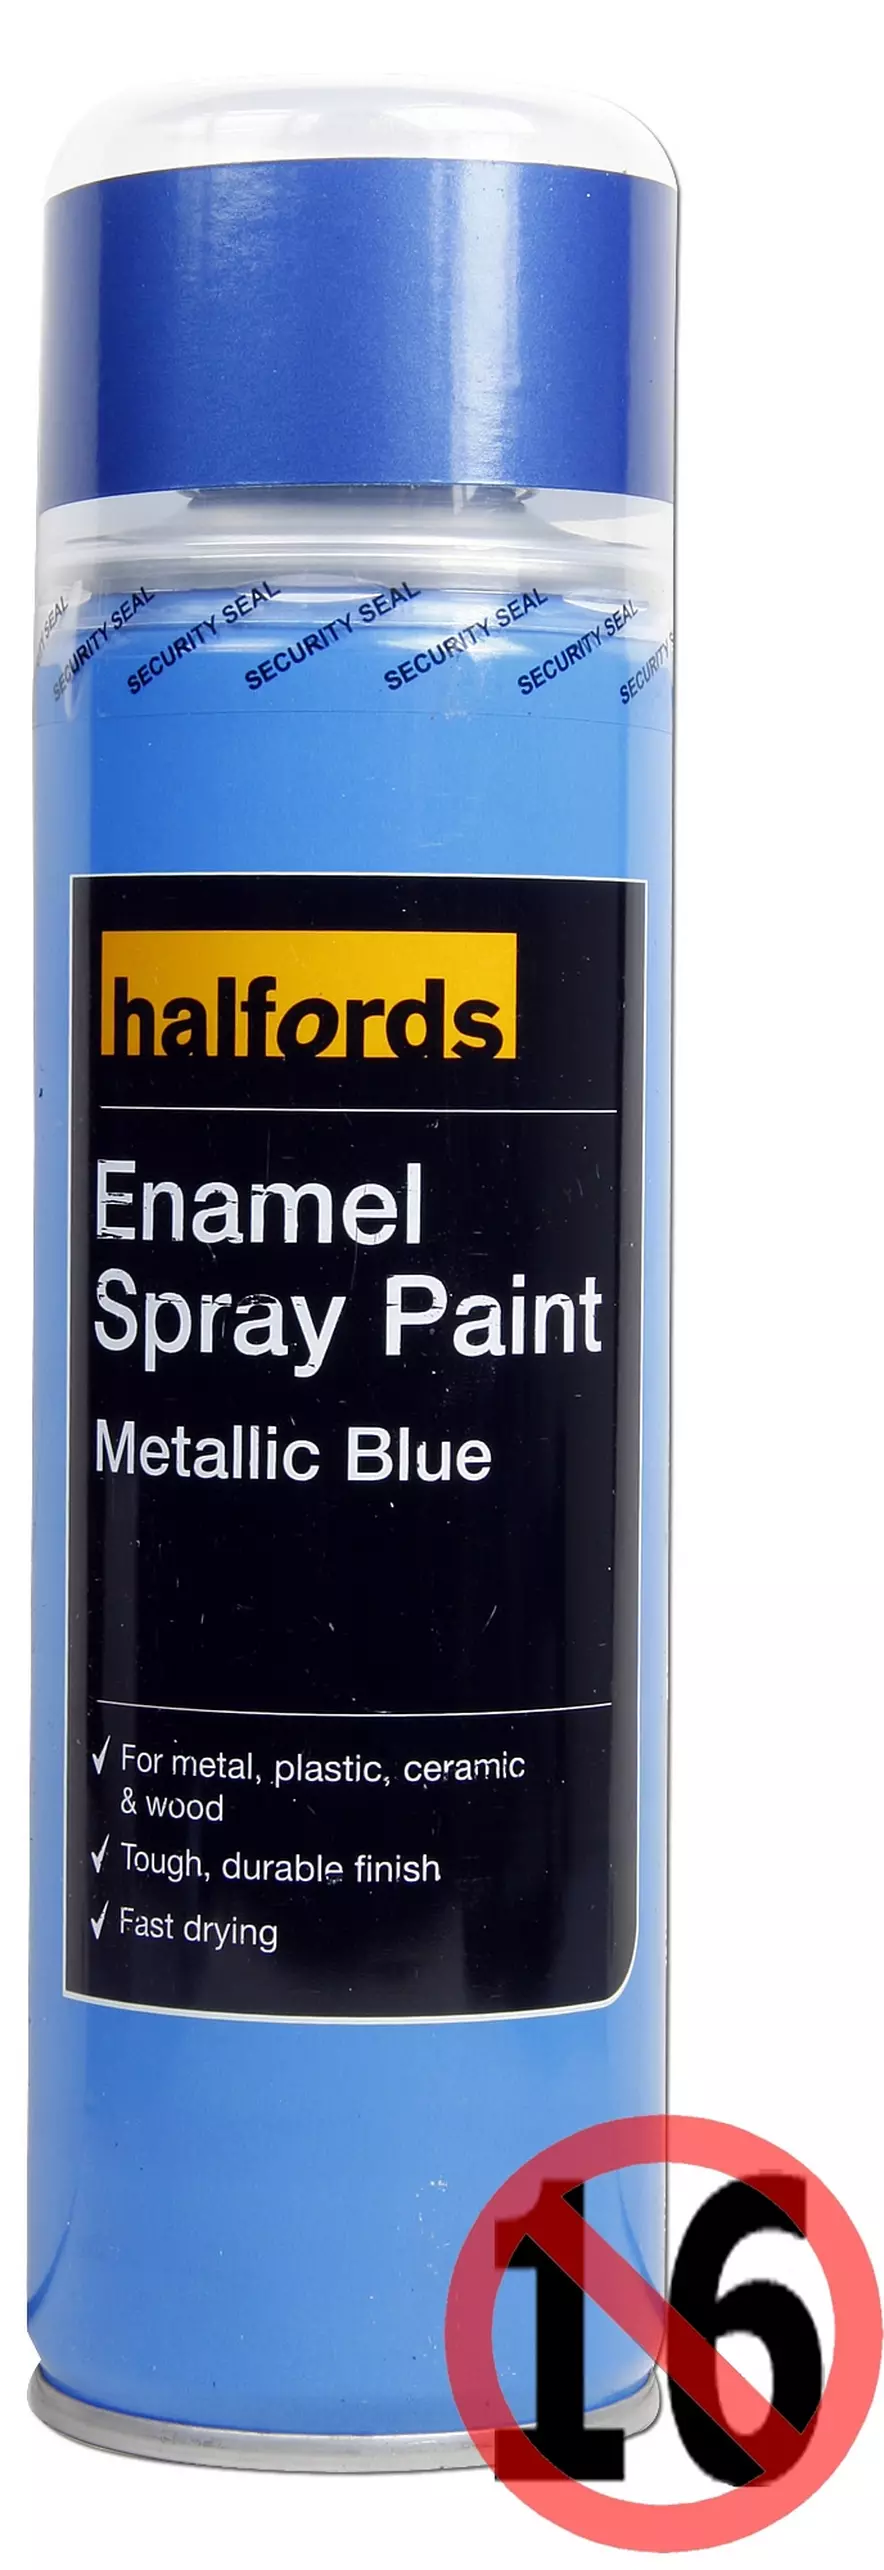 Halfords Enamel Spray Paint Metallic Blue 300ml